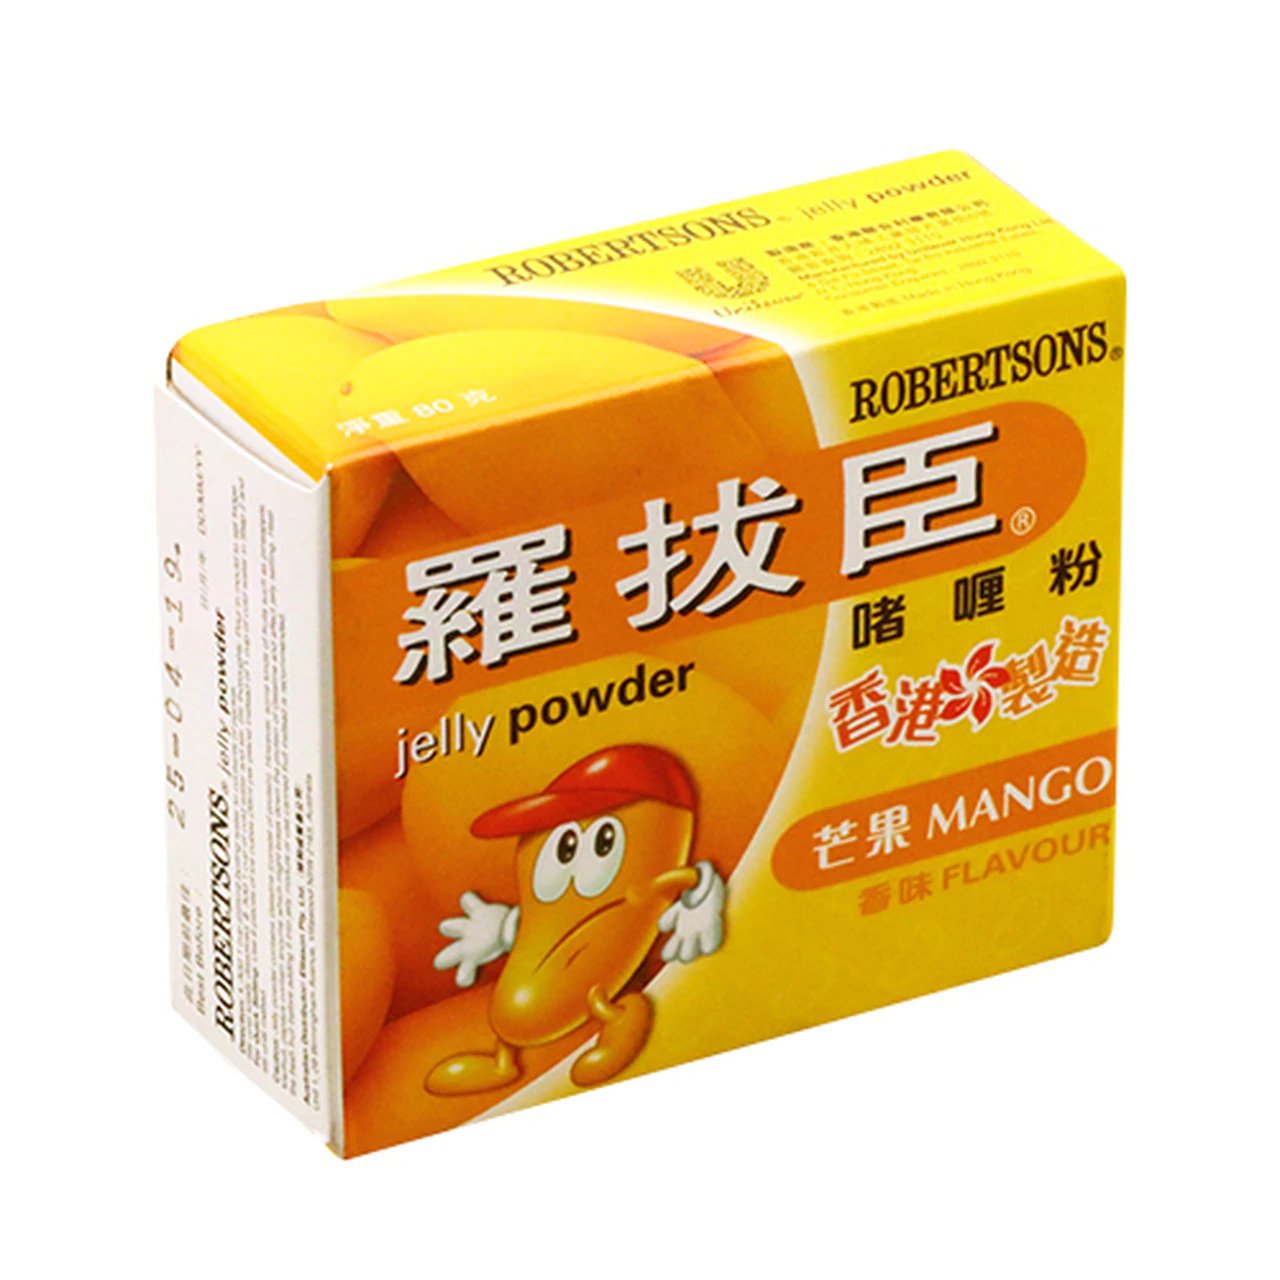 ROBERTSON Jelly Powder Mango Flavor 80G 羅拔臣 啫喱粉芒果味 80G